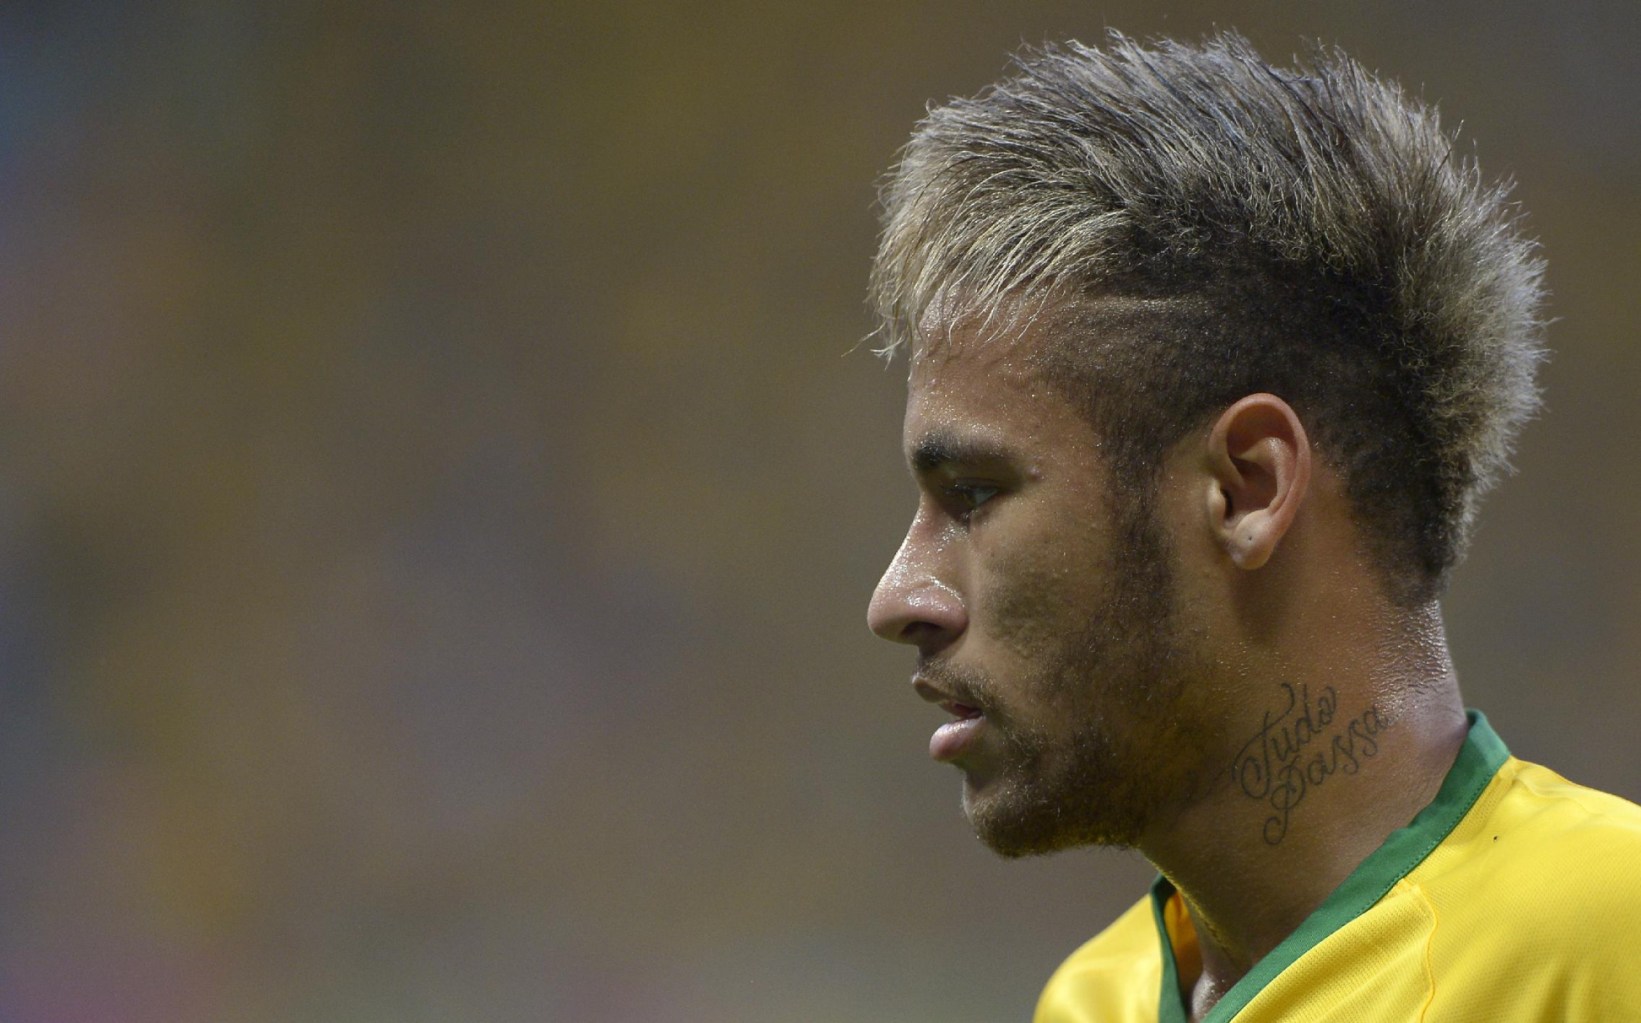 Neymar neck tattoo saying Tudo Passa